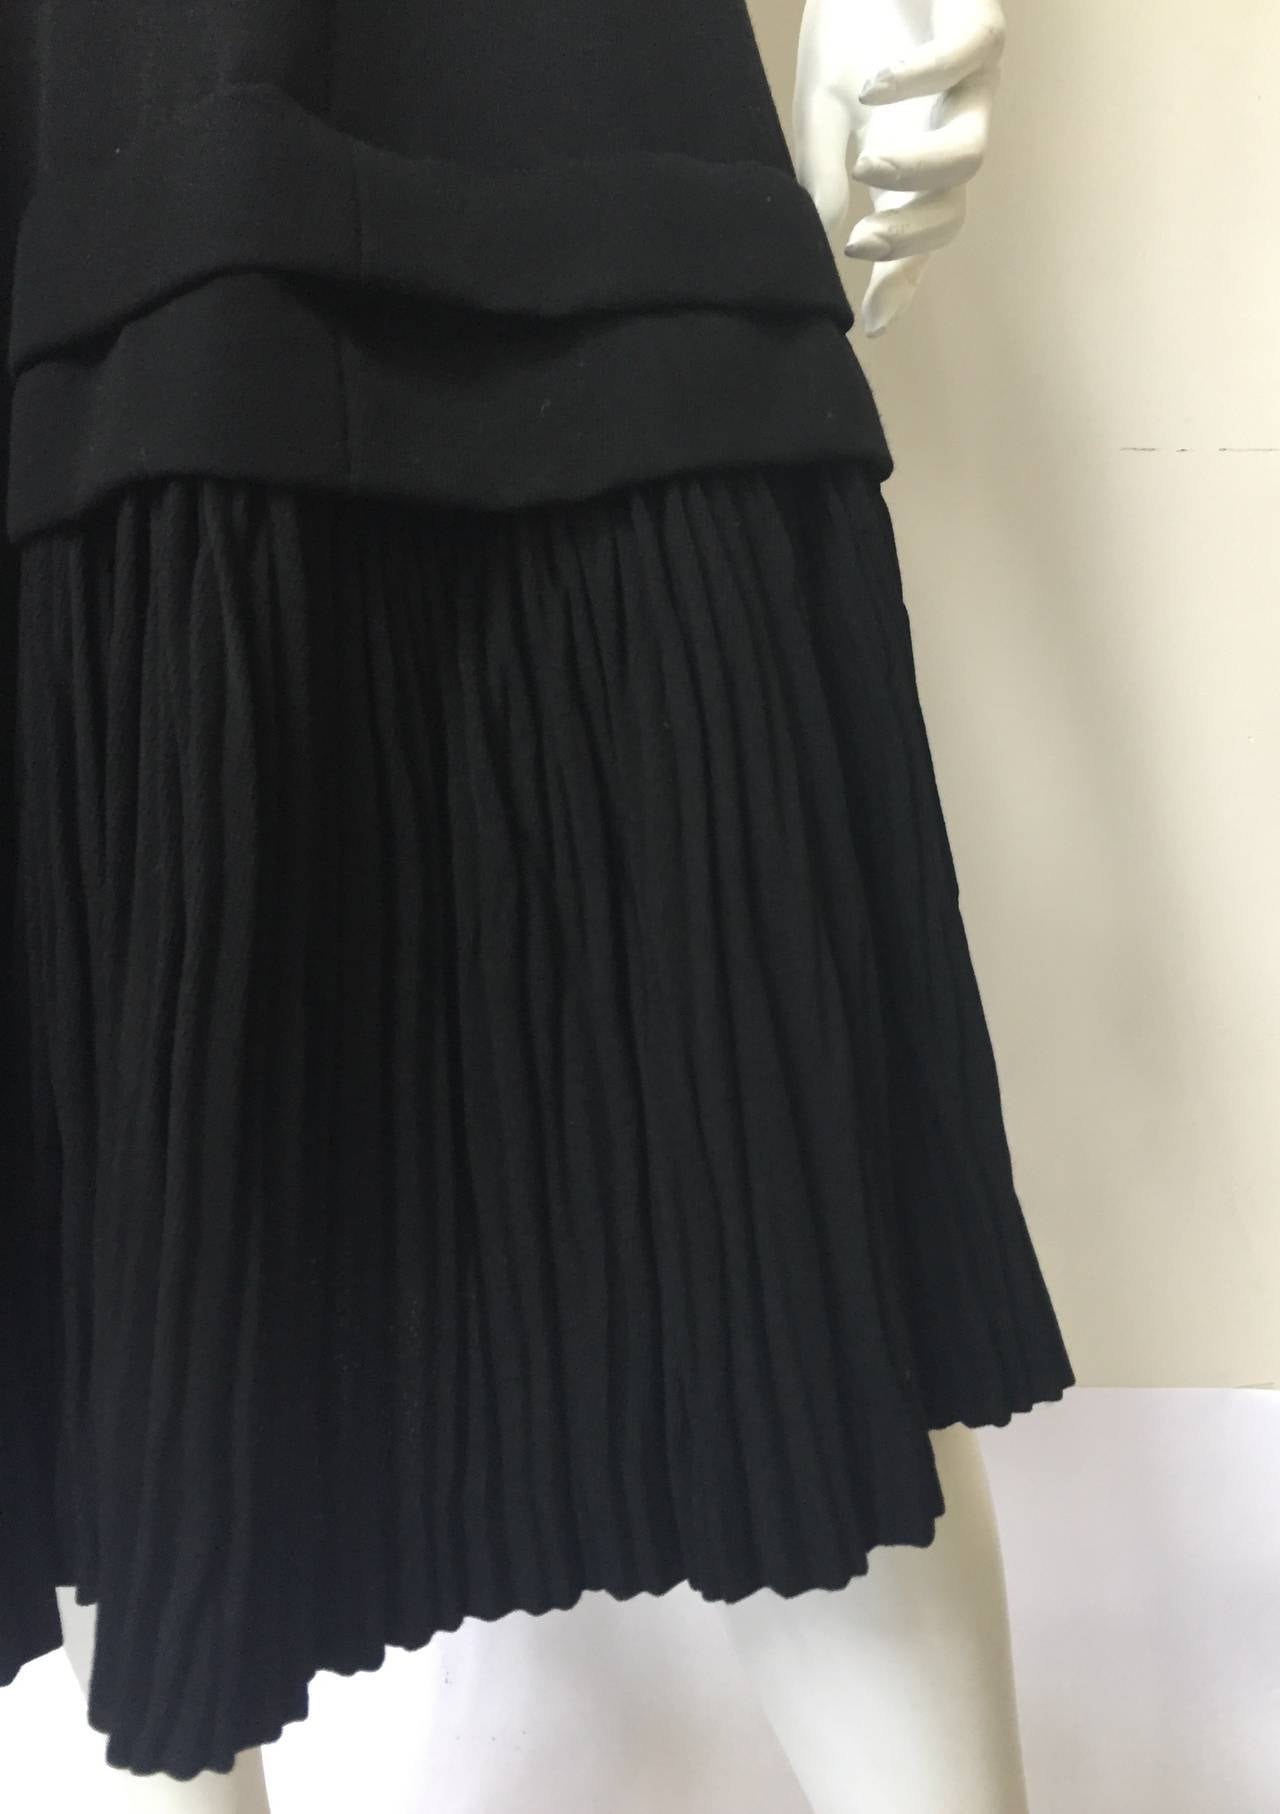 Women's Comme des Garcons by Rei Kawakubo for Bergdorf Goodman skirt size medium. For Sale